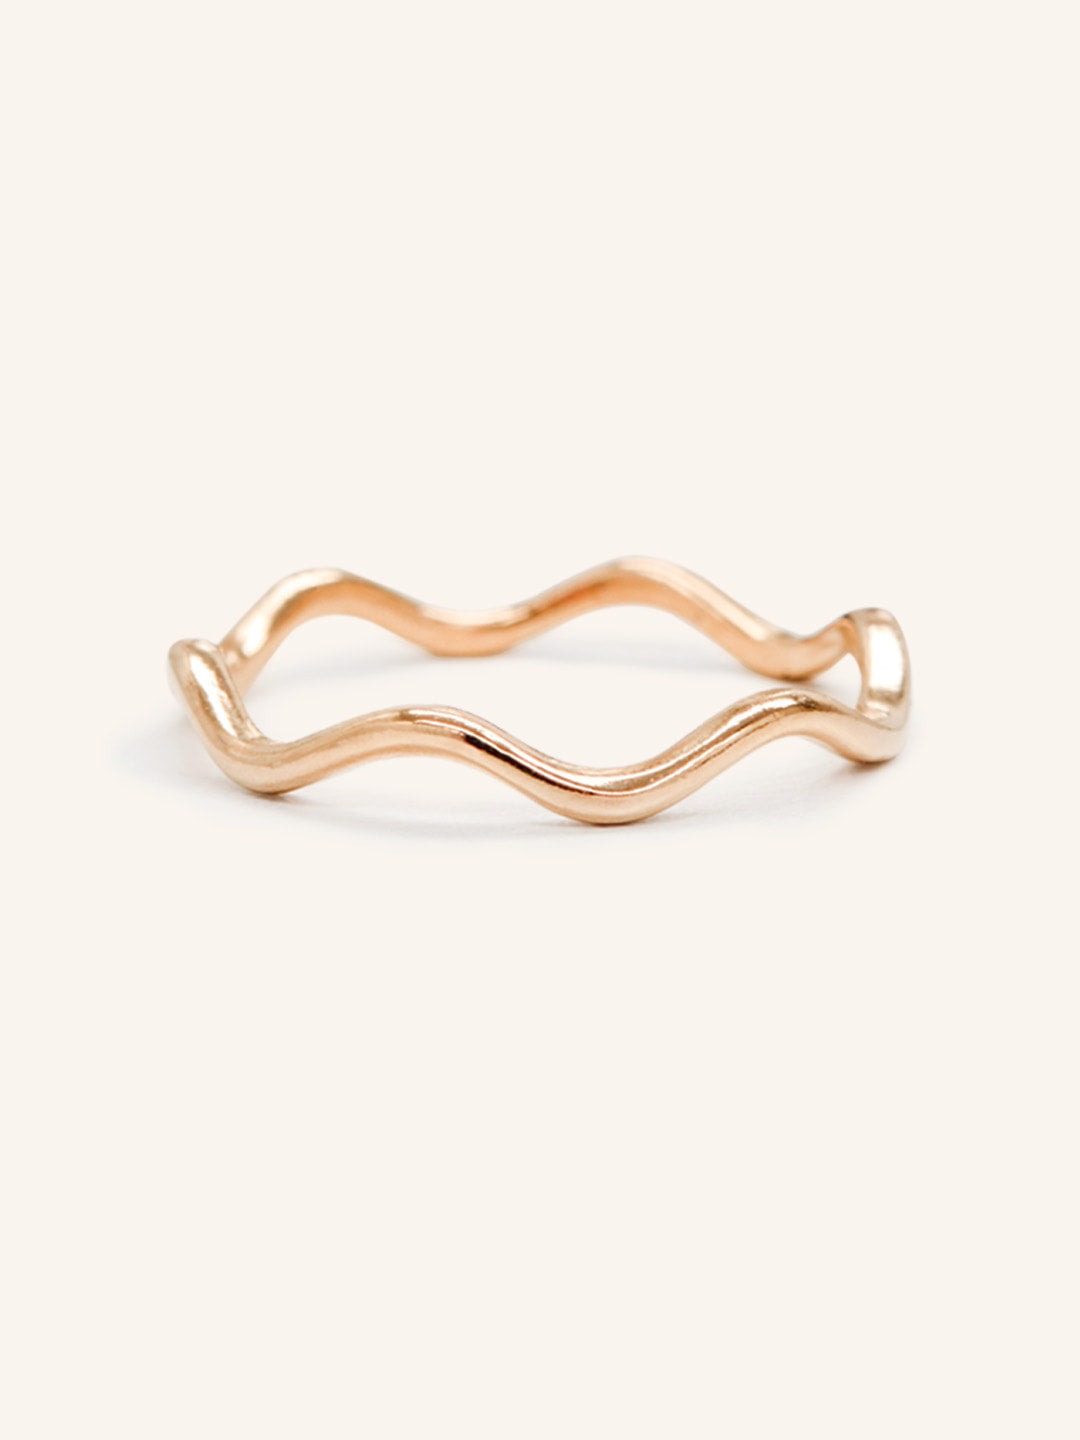 Wavy Gold Ring